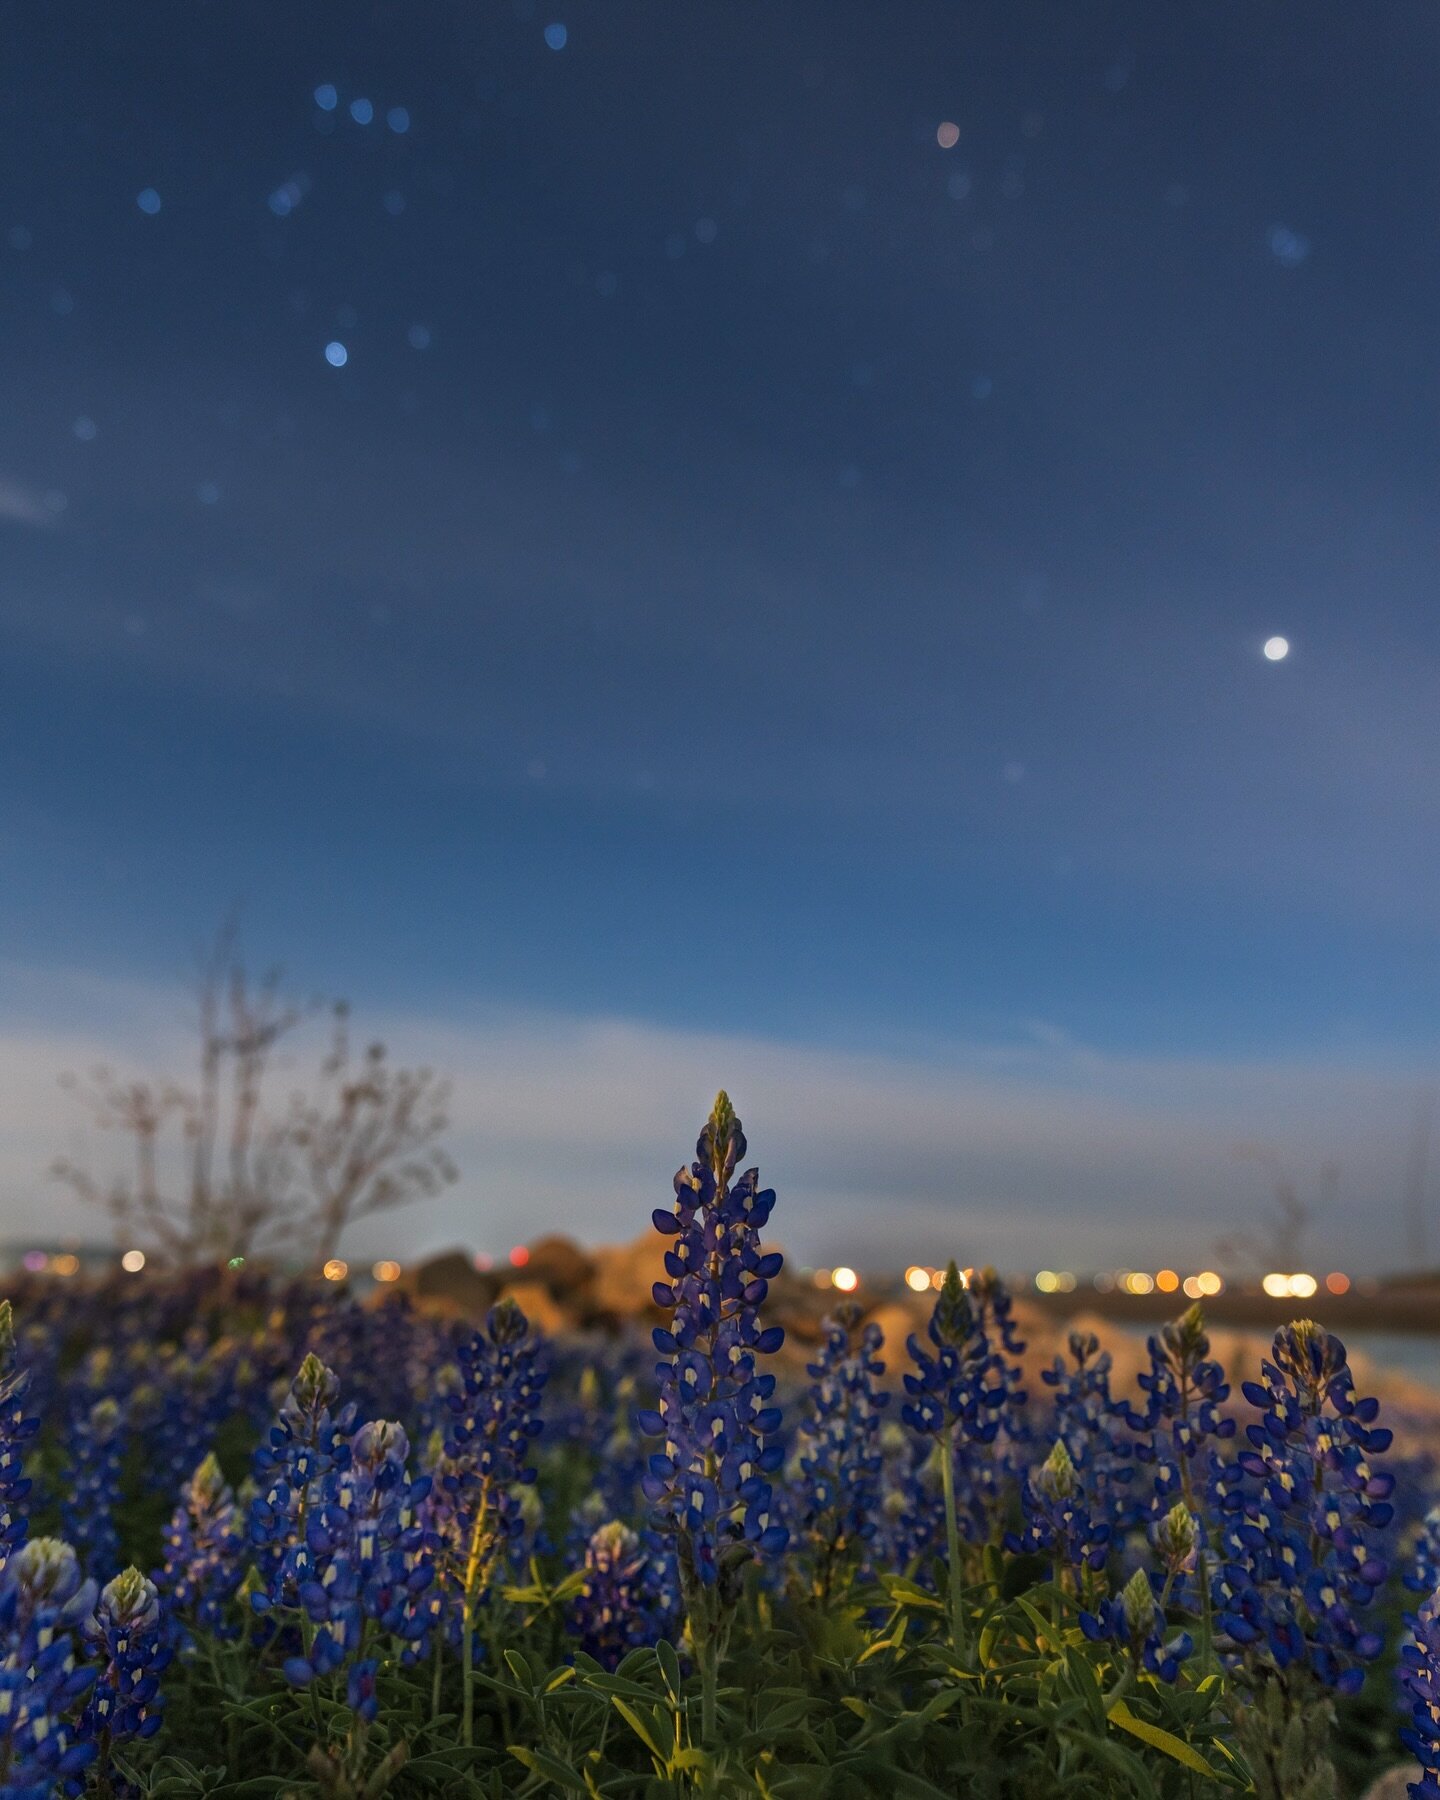 Bluebonnet Bliss 💙✨

#bluebonnets #astrophotography #texas